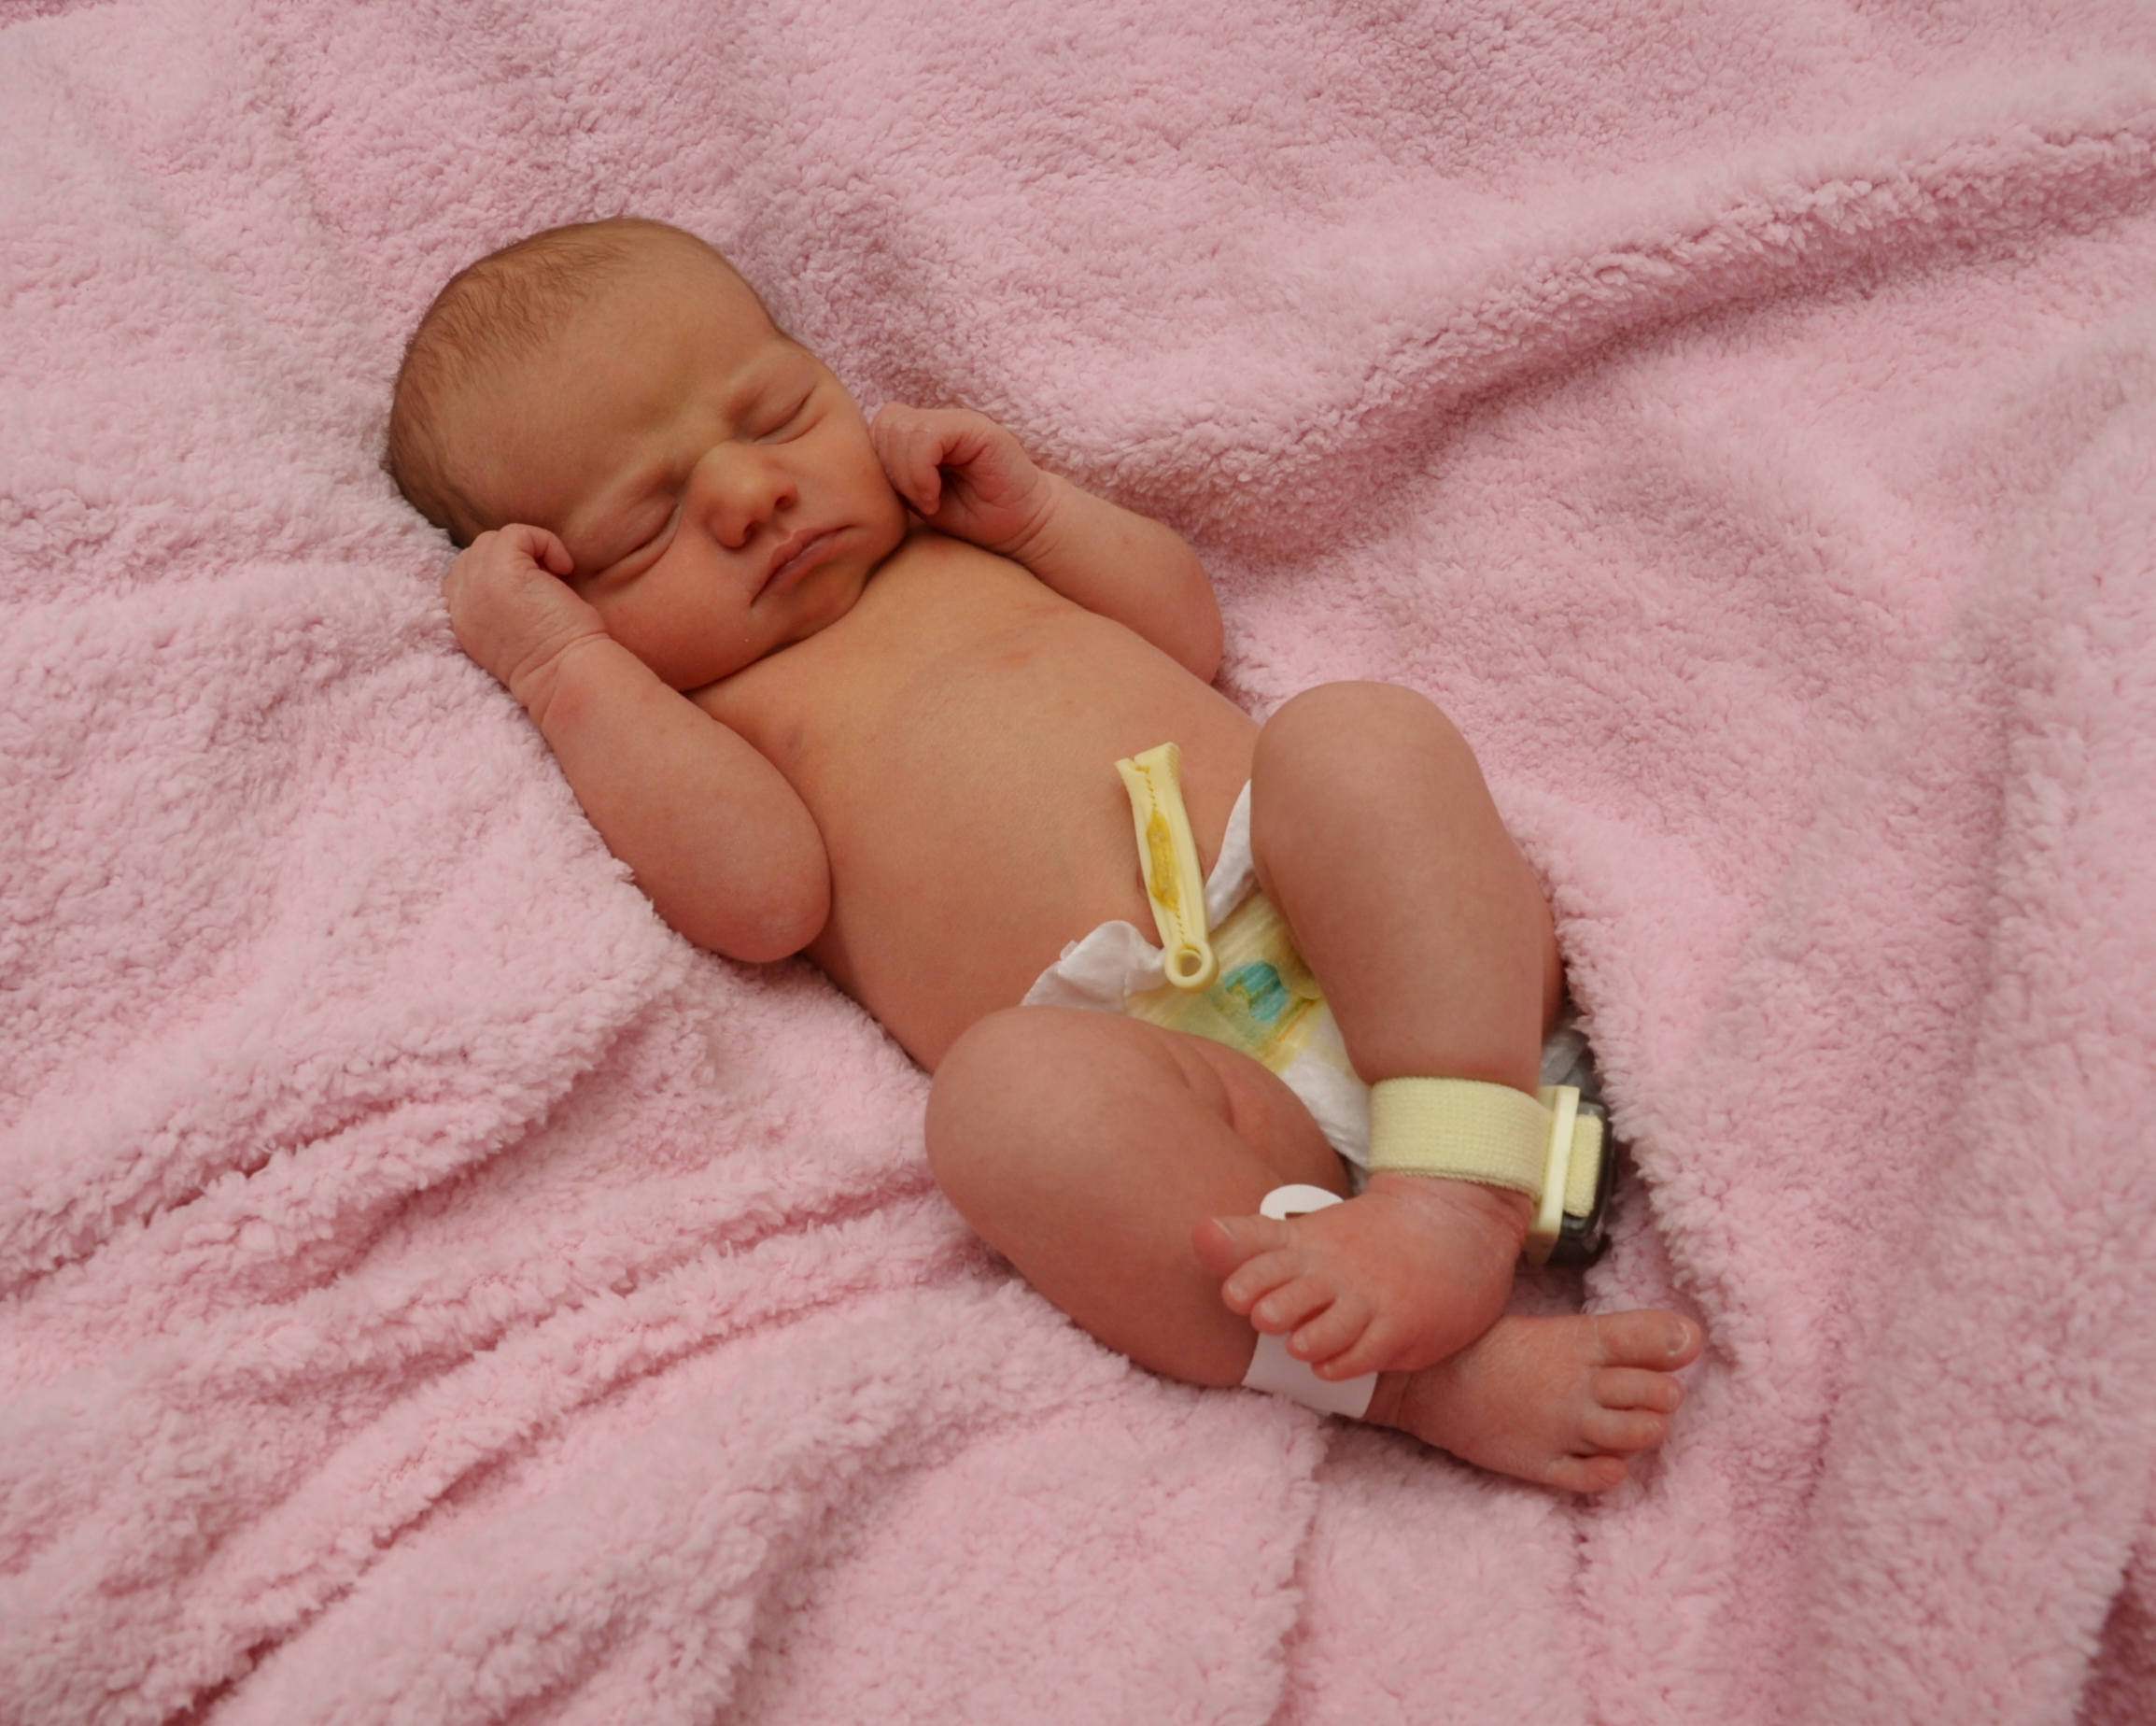 A newborn infant wearing an Accutech "Cuddles" tag.